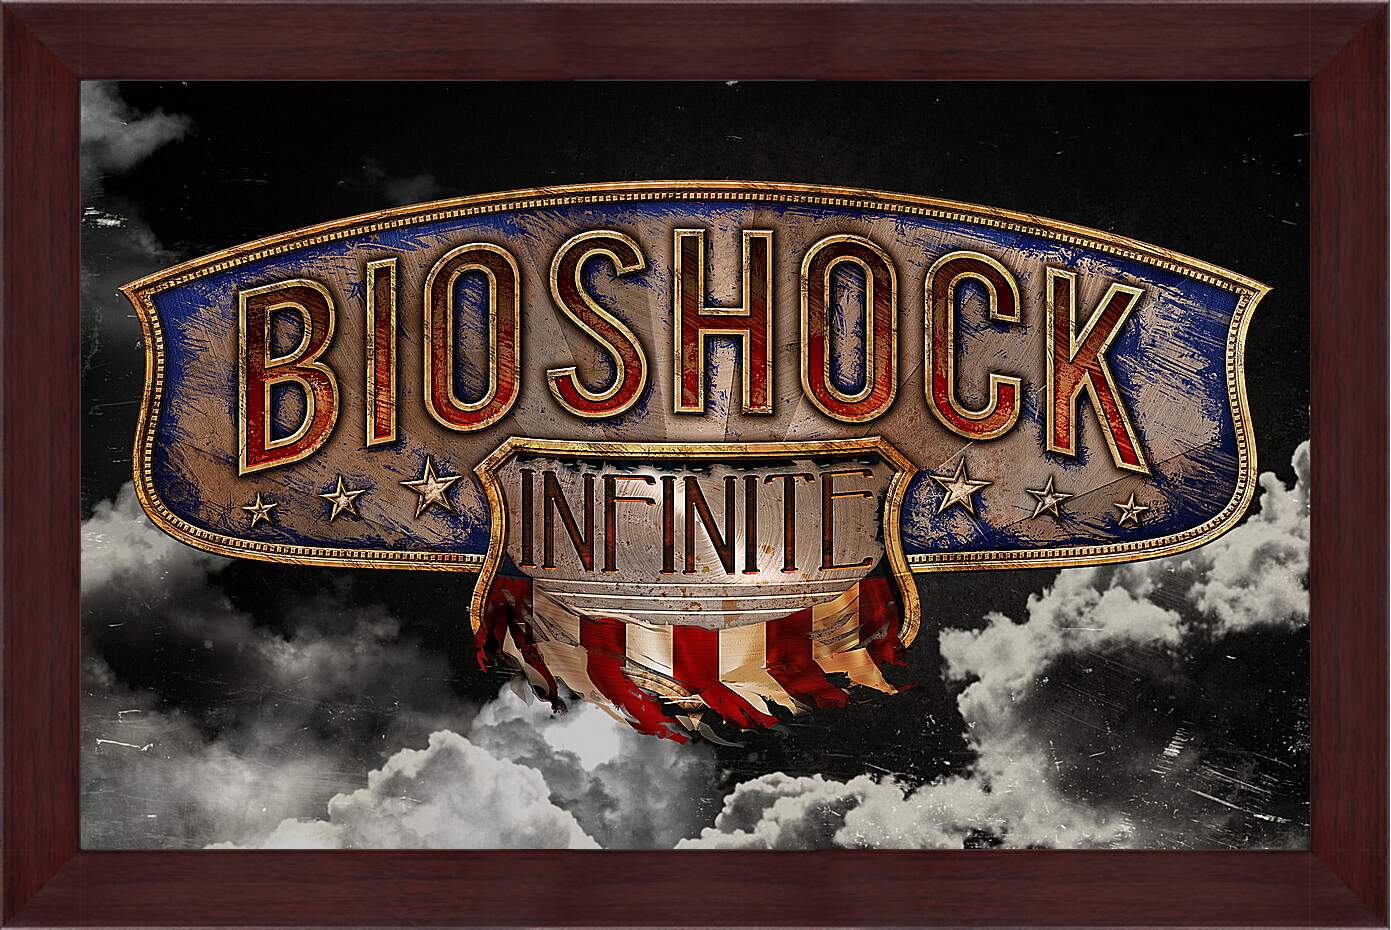 Картина в раме - Bioshock Infinite
